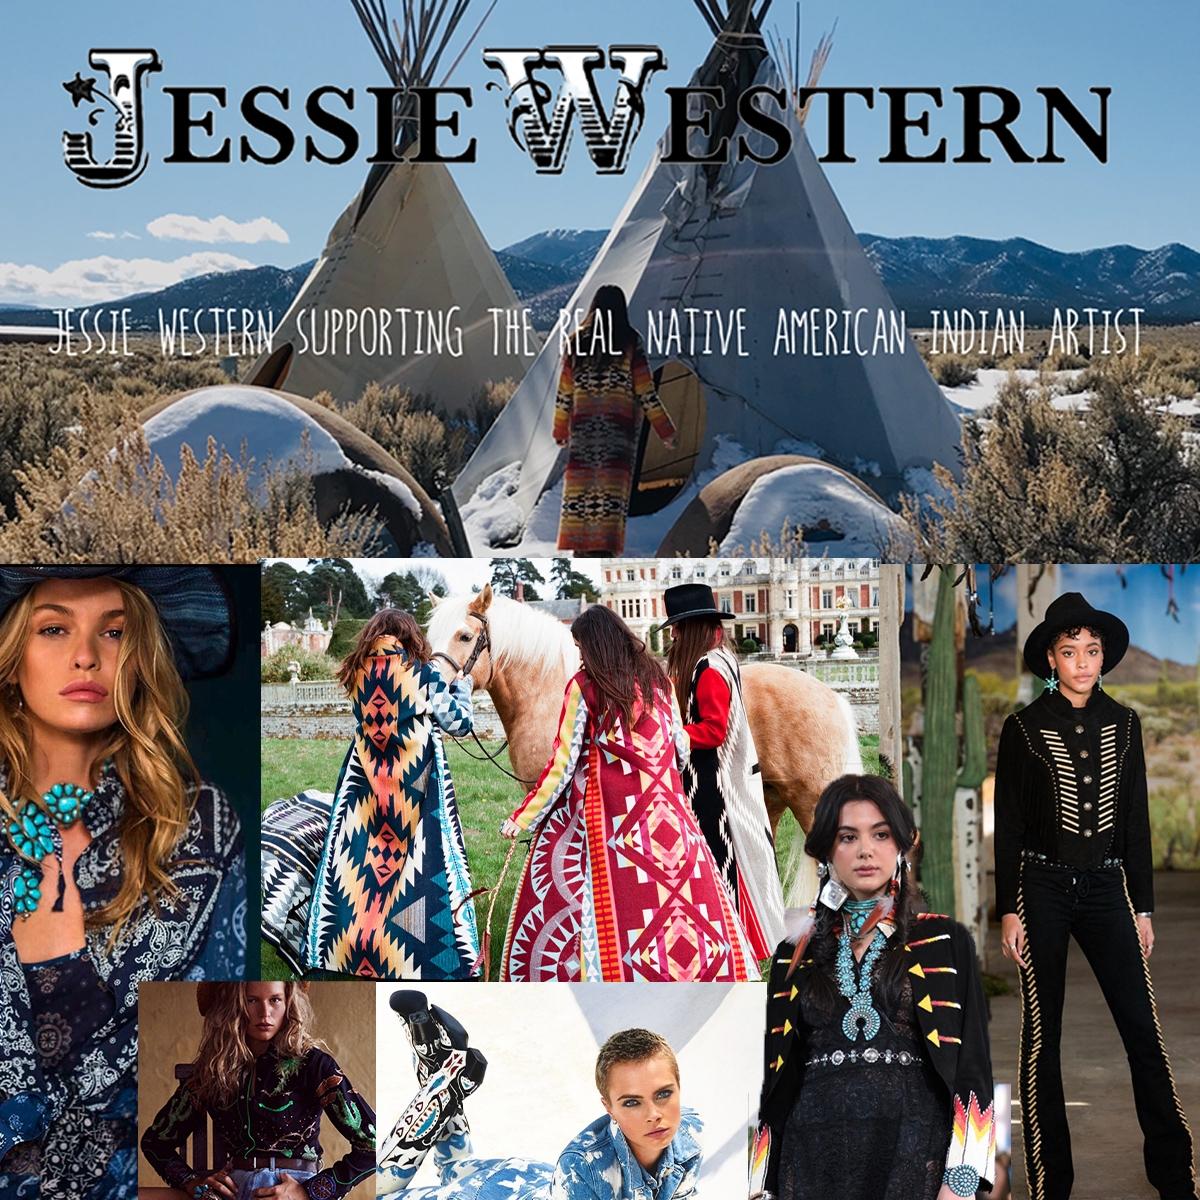 Jessie Western